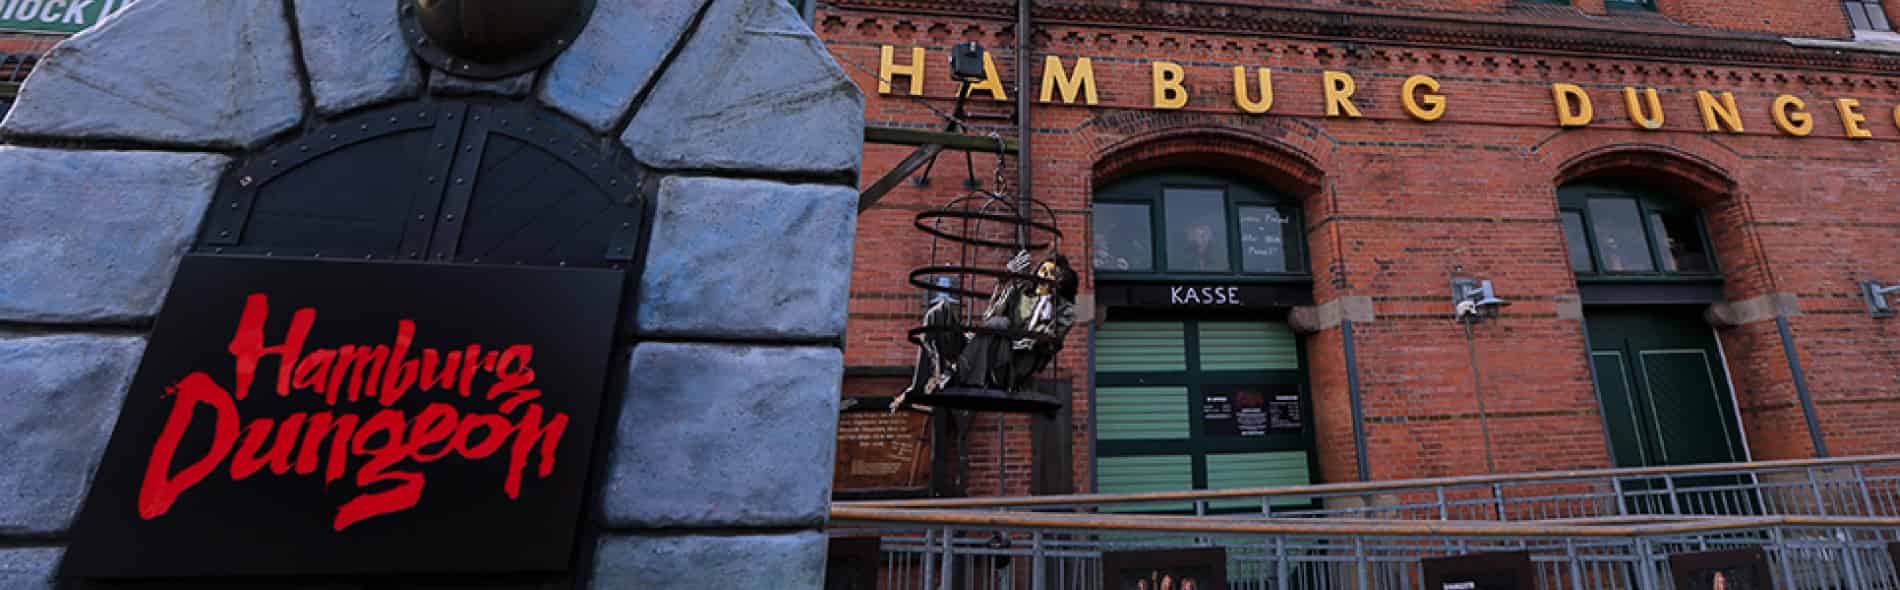 hamburg dungeon english tour